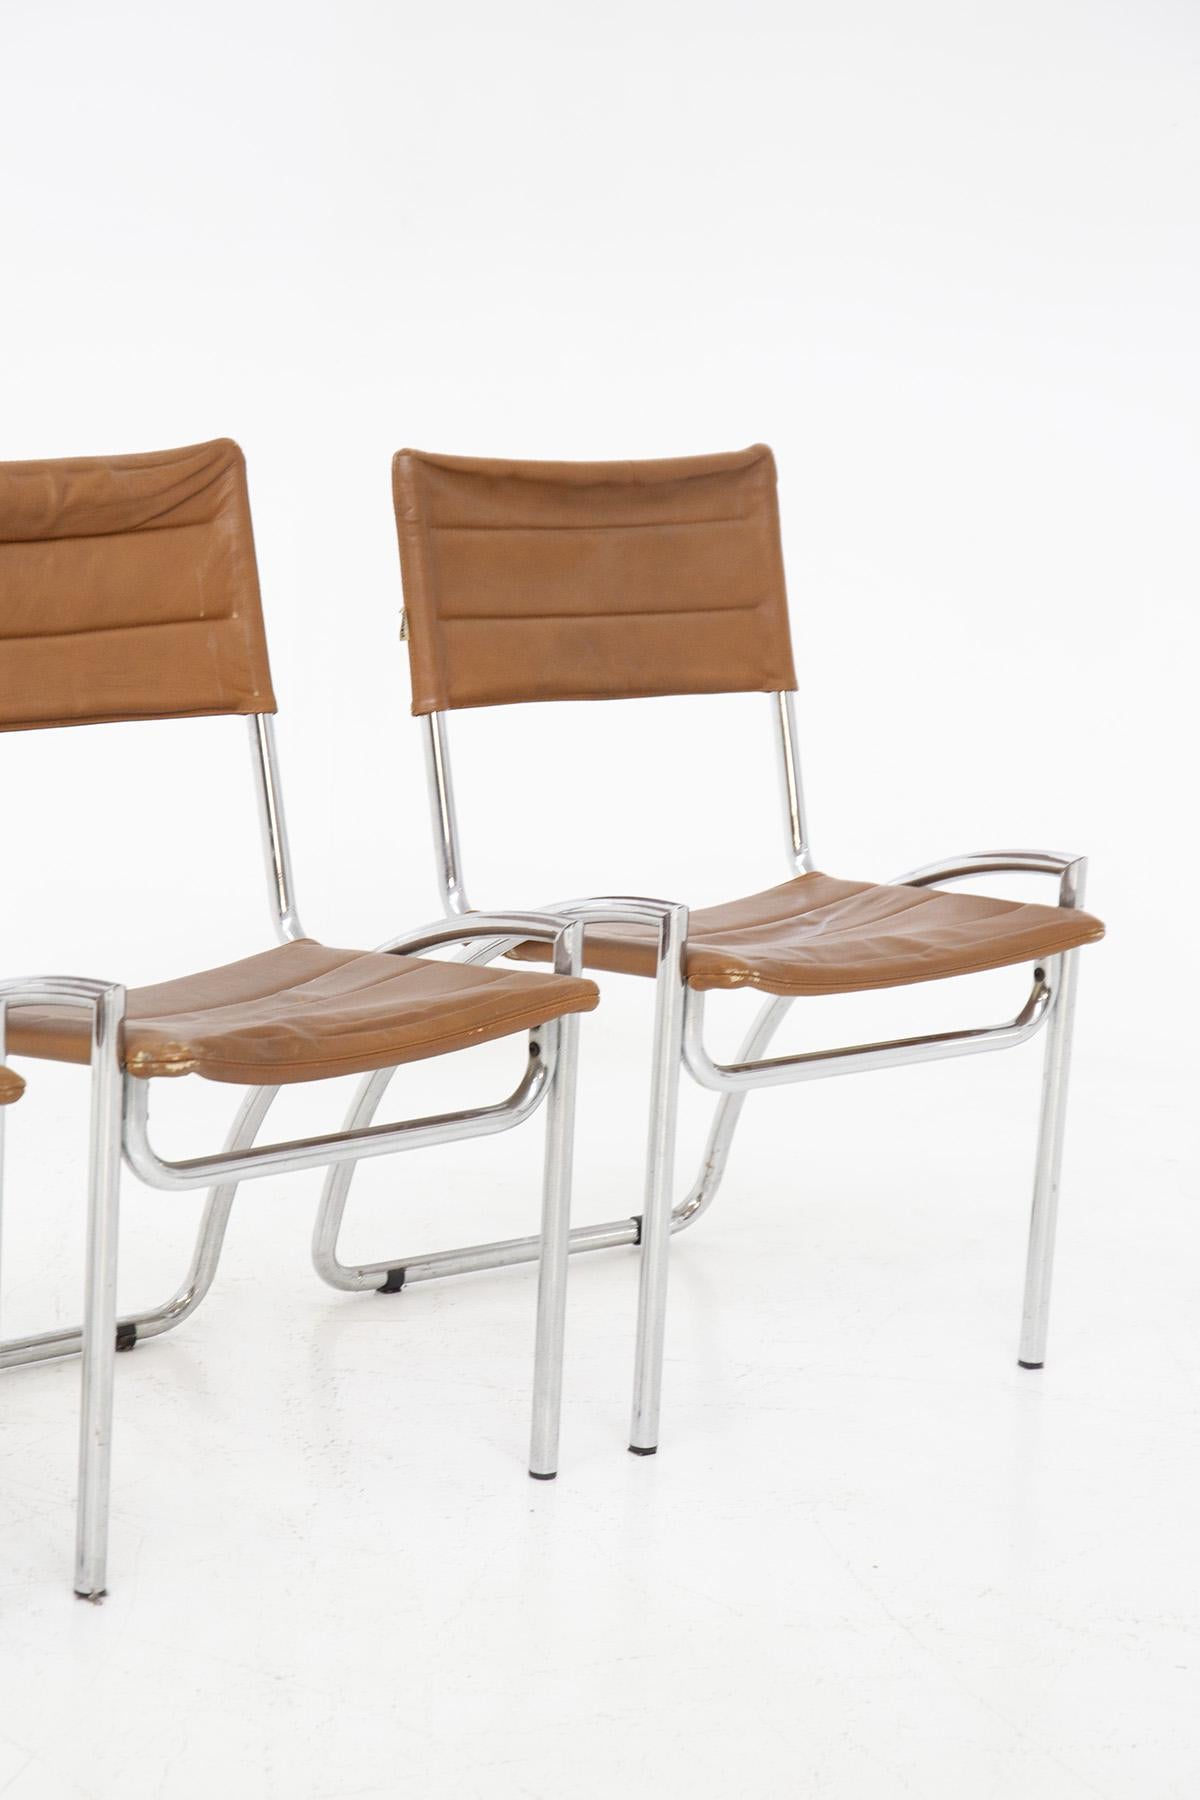 Italian Gae Aulenti Chairs by Elam Model Lira Set of Four, Published